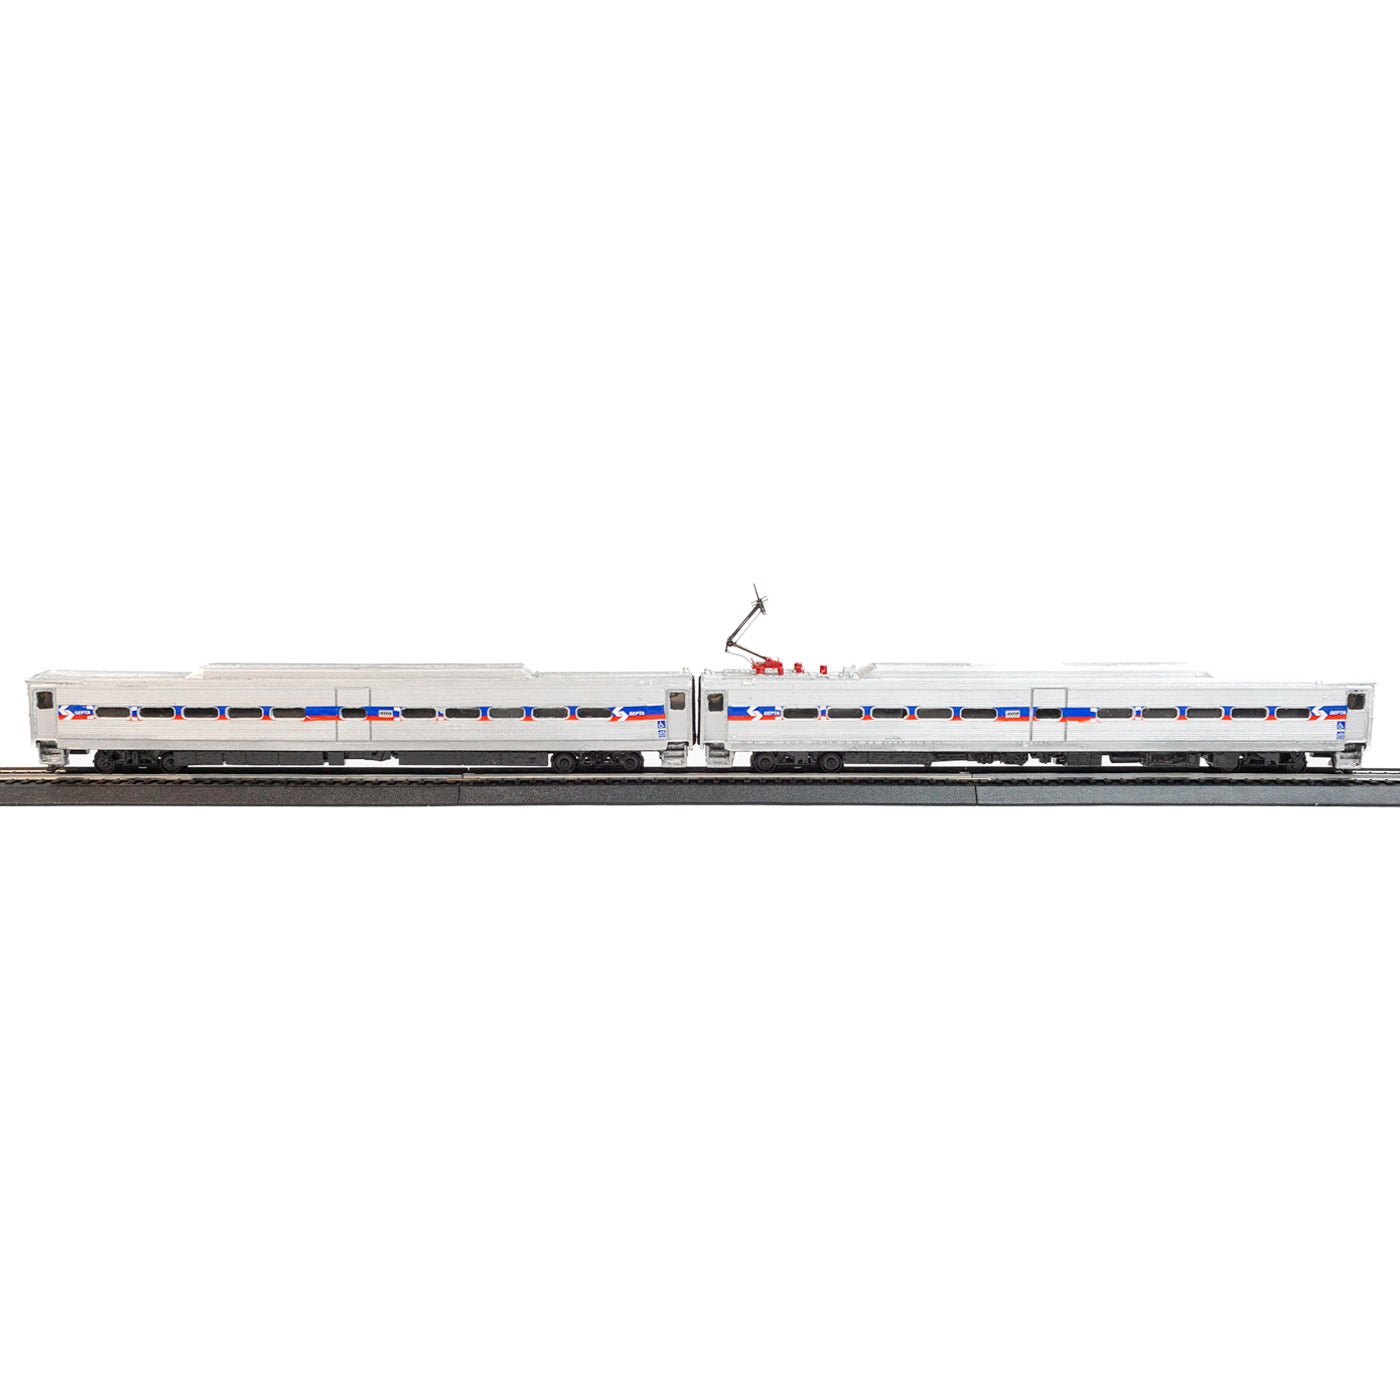 SEPTA Silverliner IV Married Pair Handcrafted Display Model Train